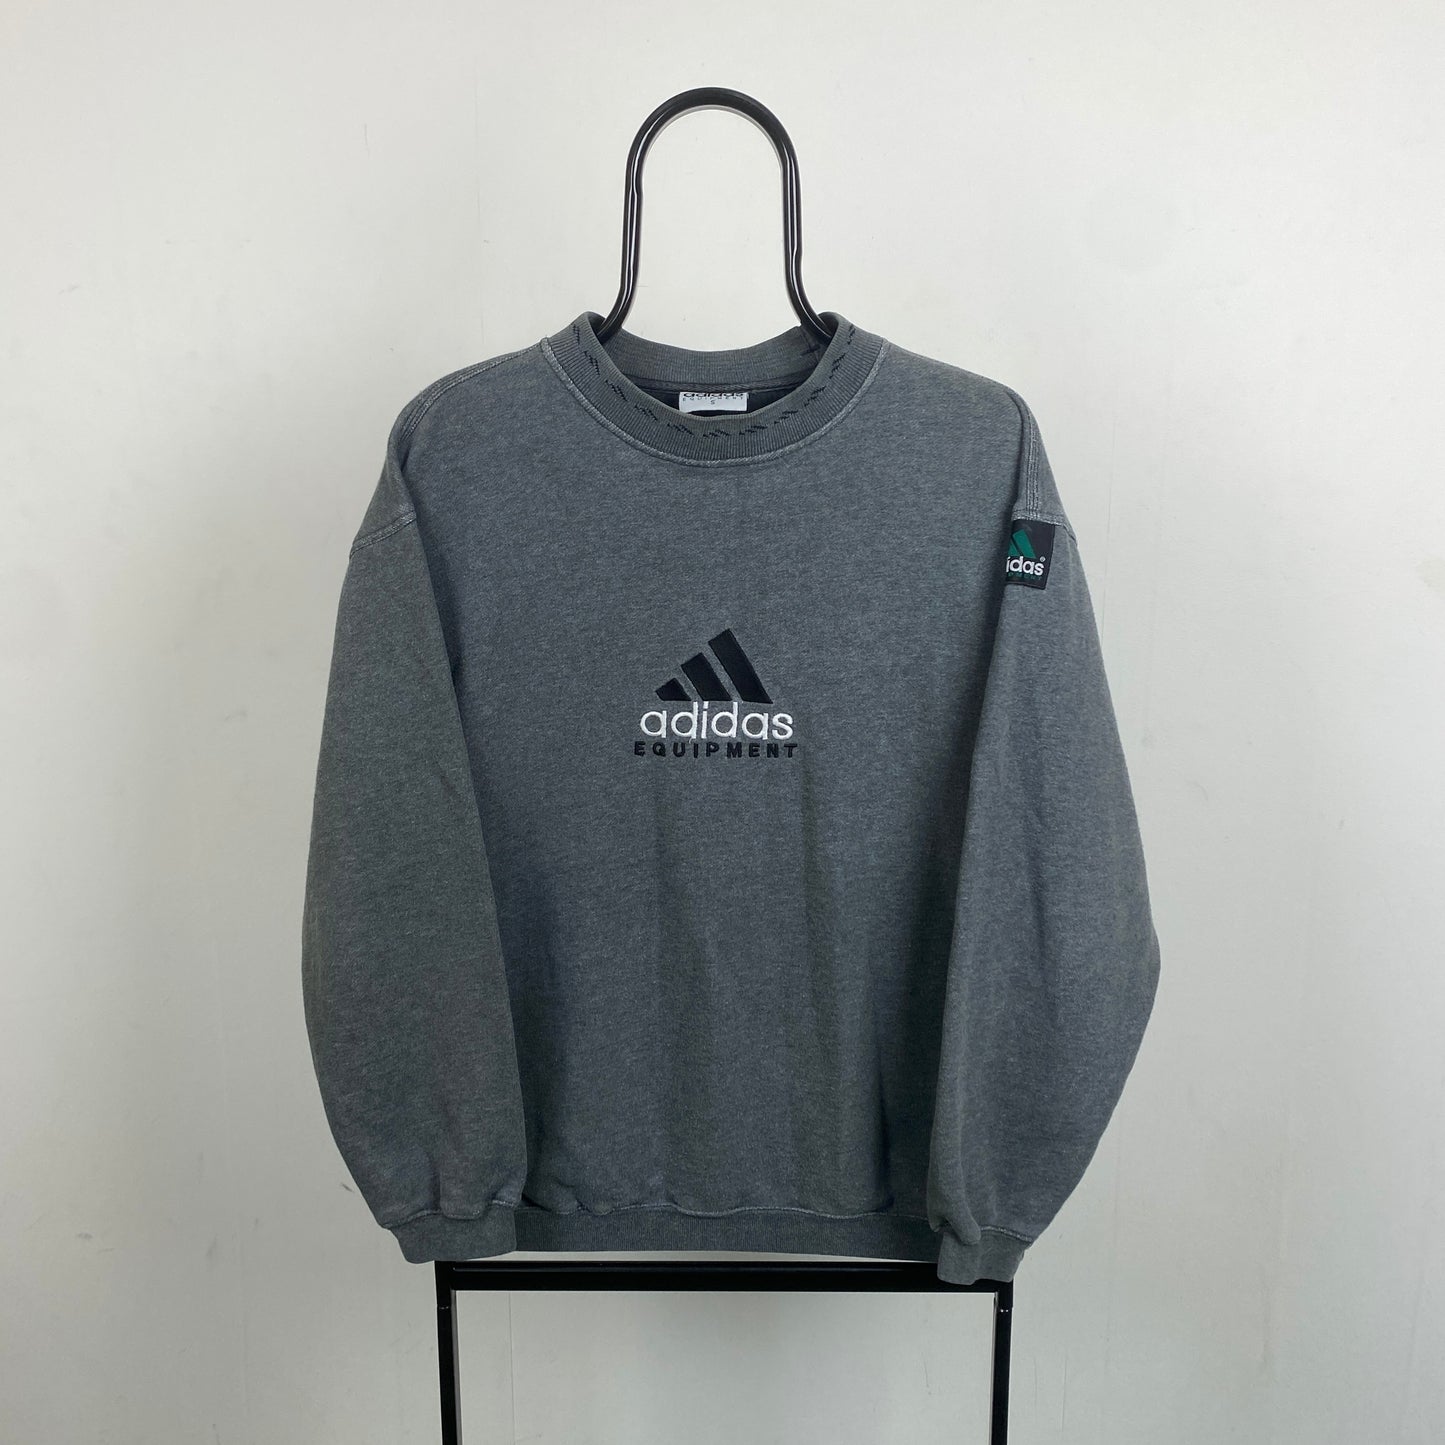 90s Adidas Equipment Sweatshirt Grey Small